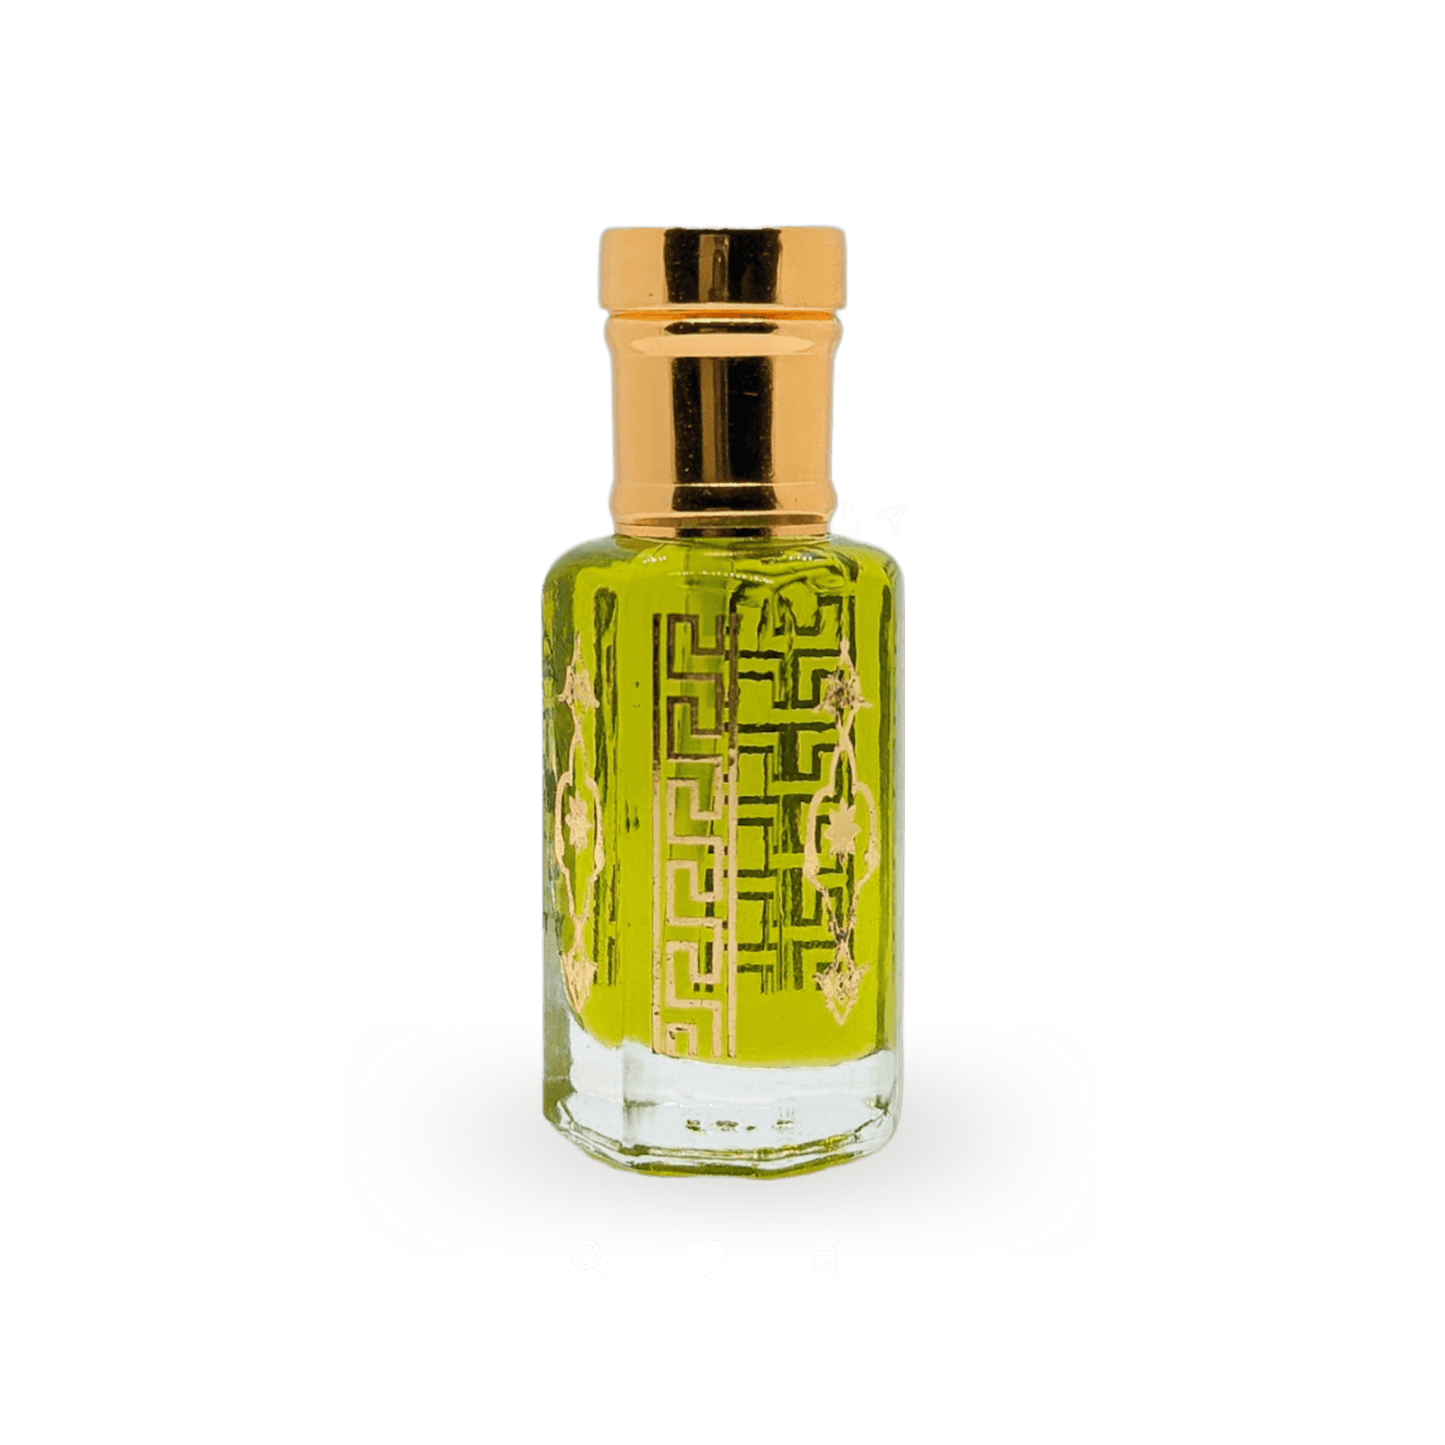 Tobacco Oud | Woody Spicy fragrance | Unisex Fragrance - Ibn Al Jebouri Perfumes